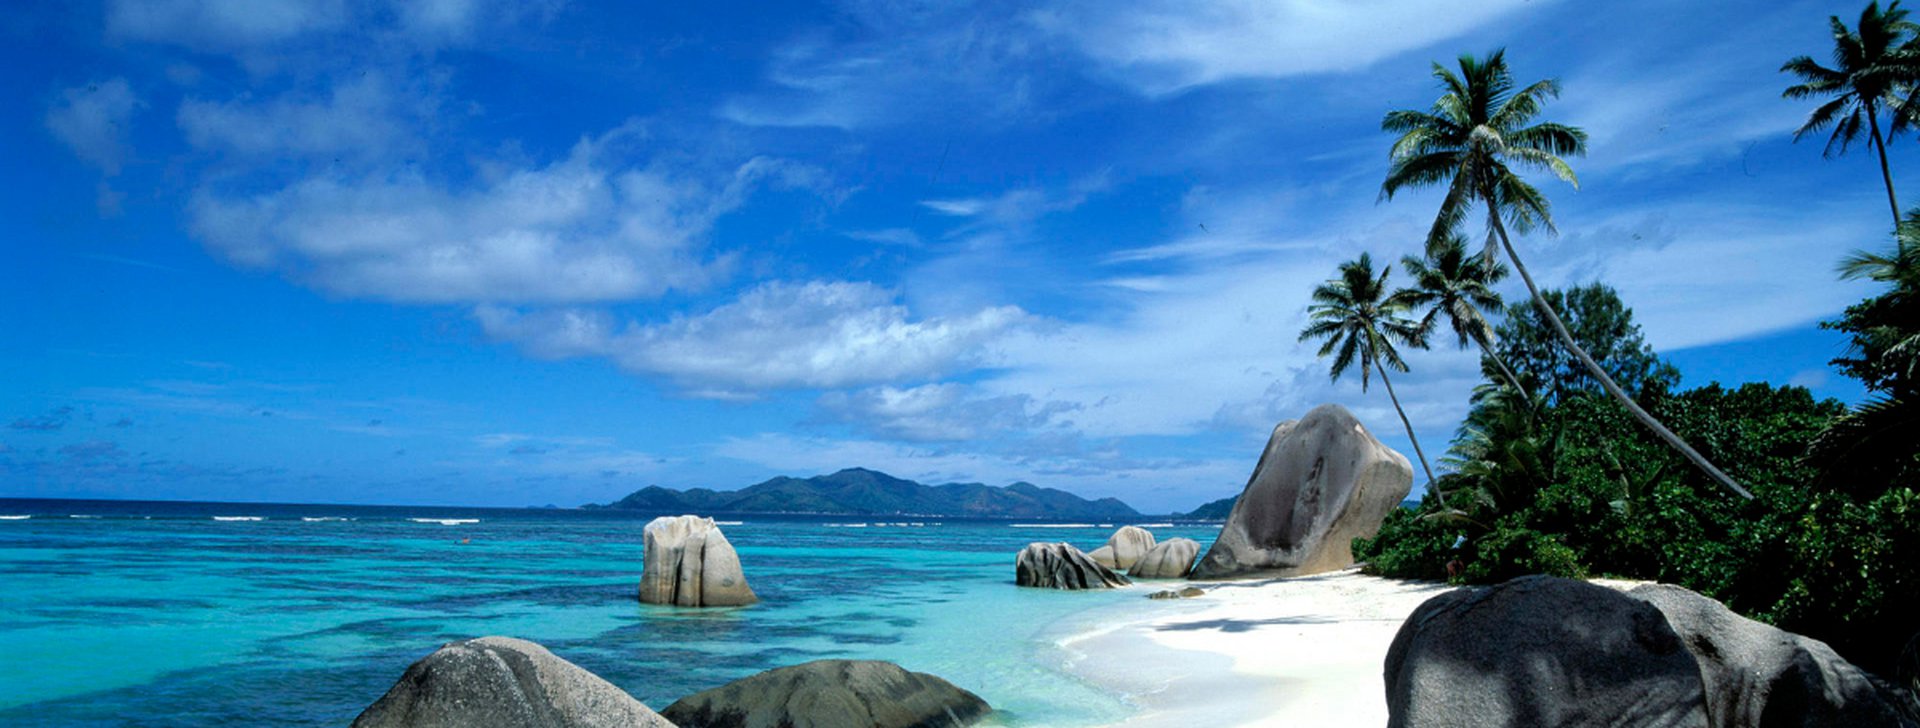 Reiseziele Seychellen